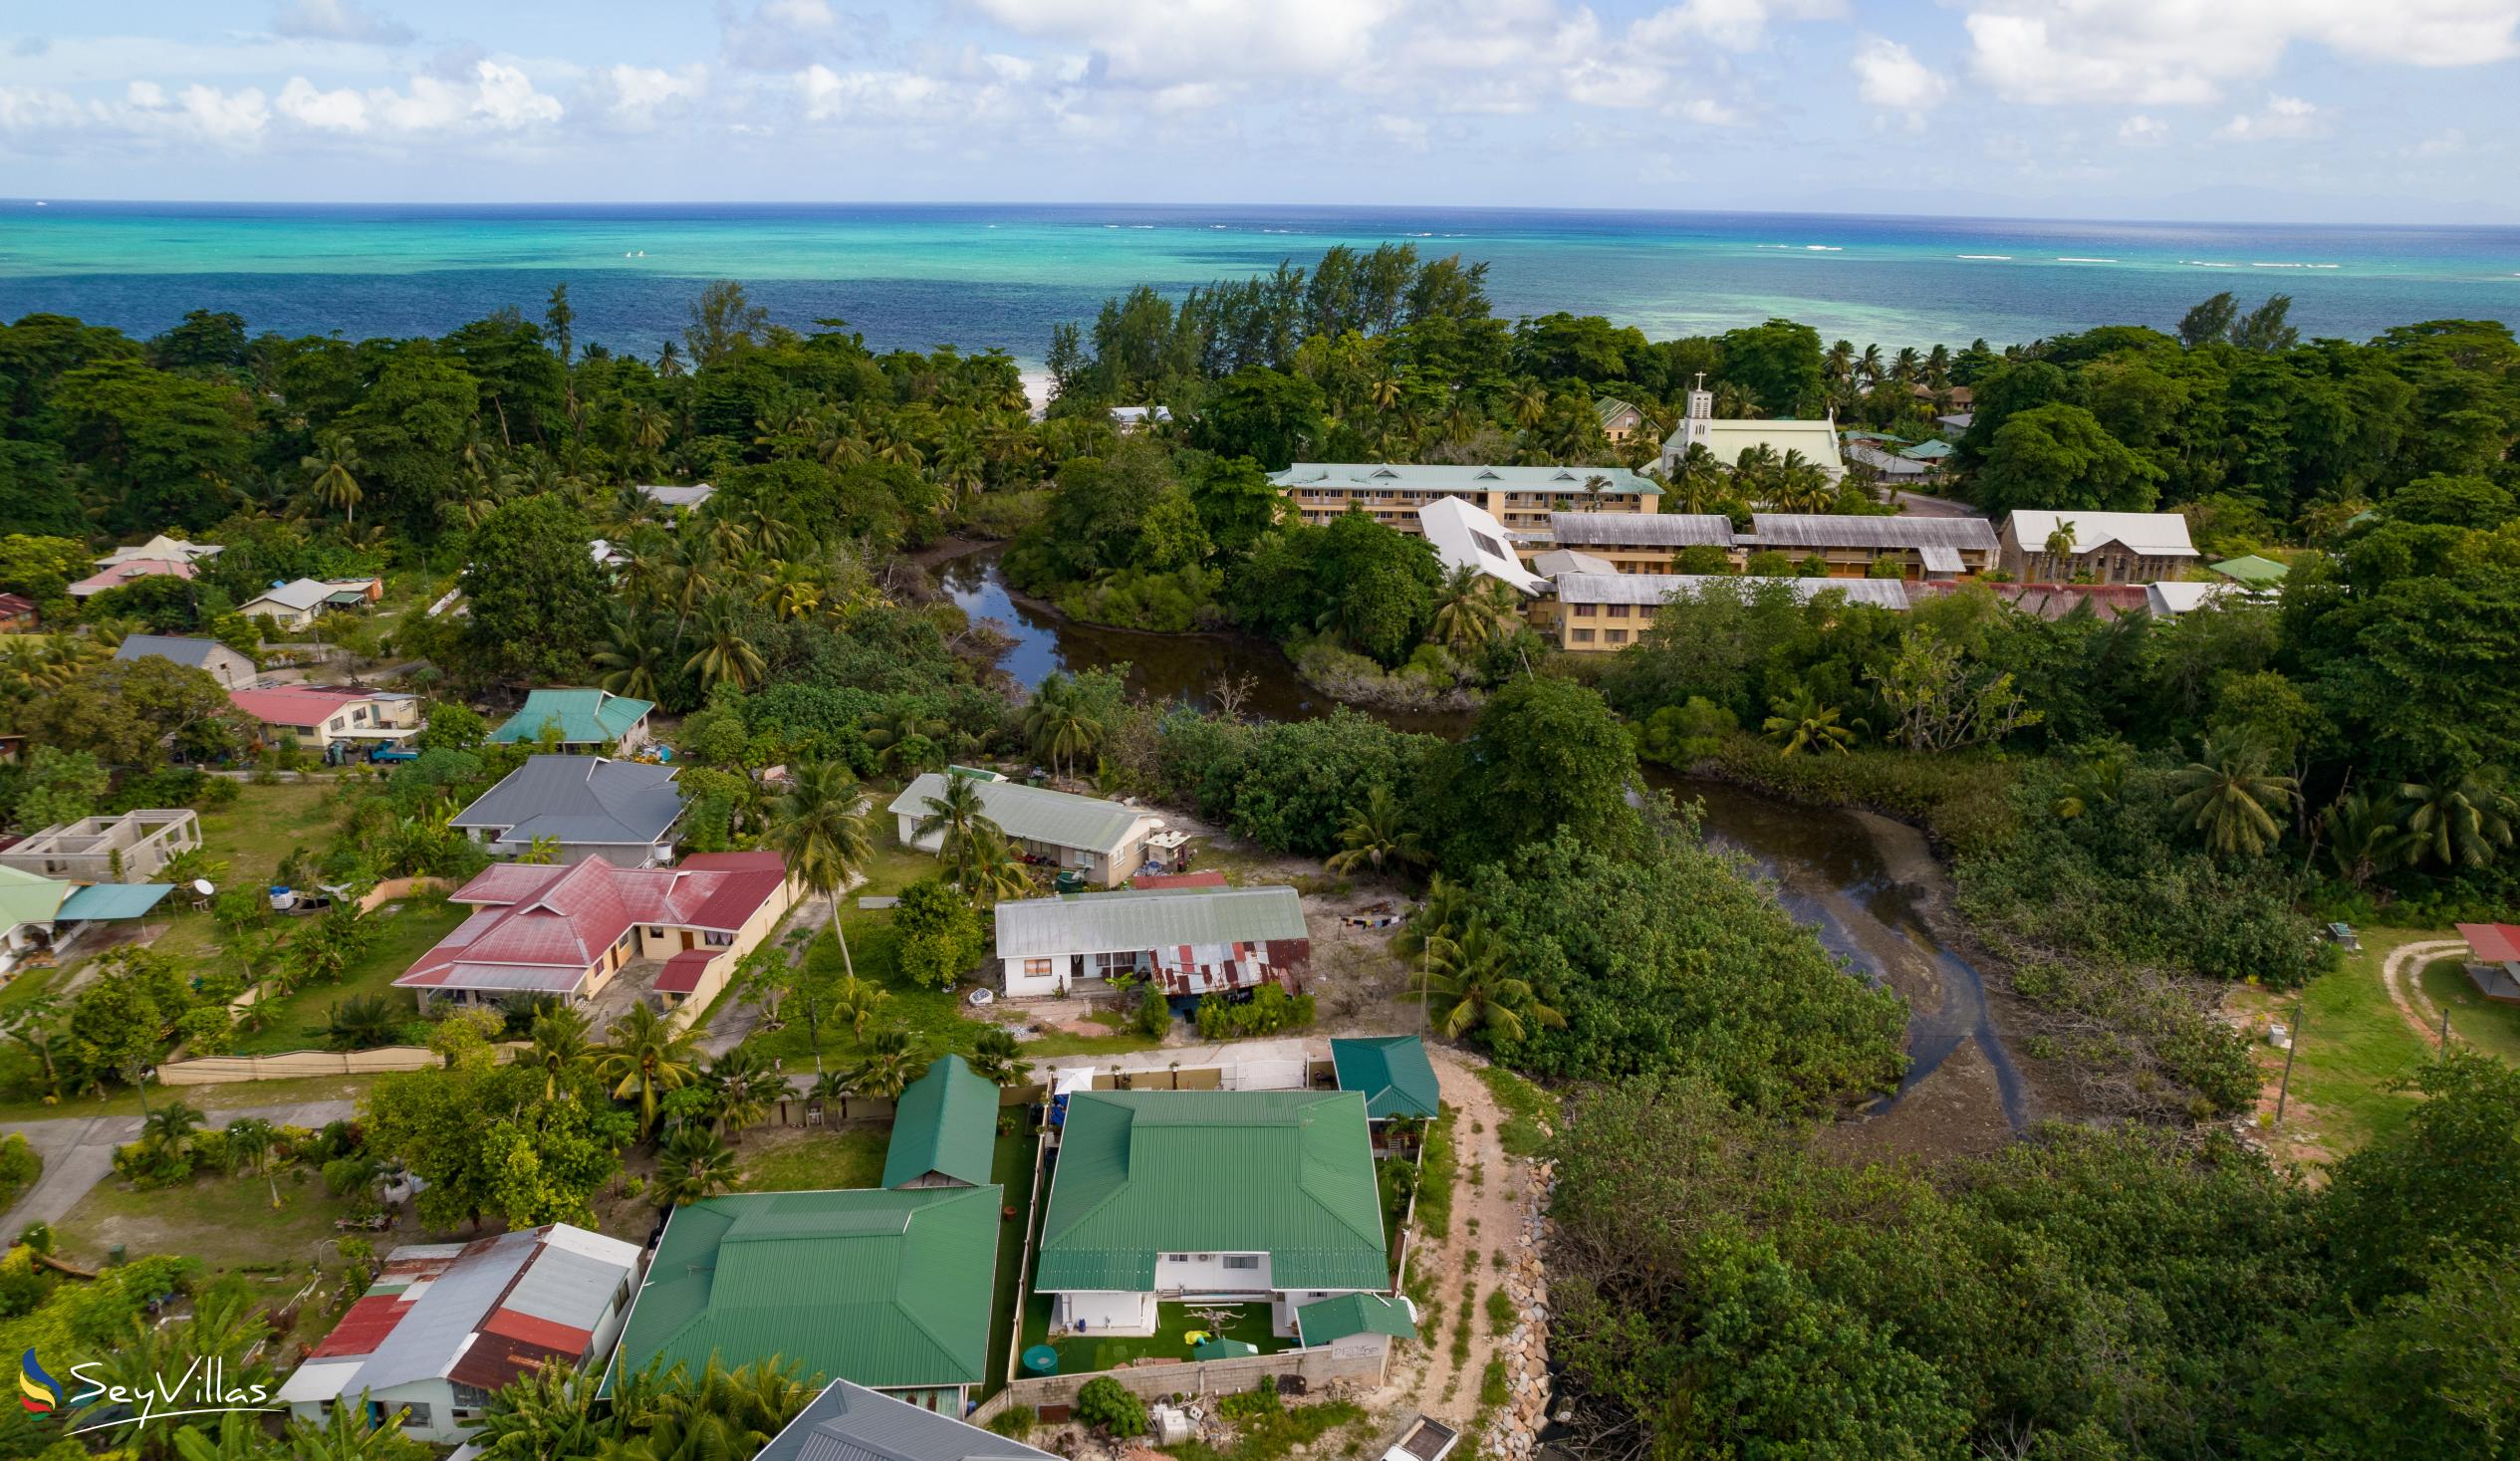 Foto 19: Happy Stay Villa - Posizione - Praslin (Seychelles)